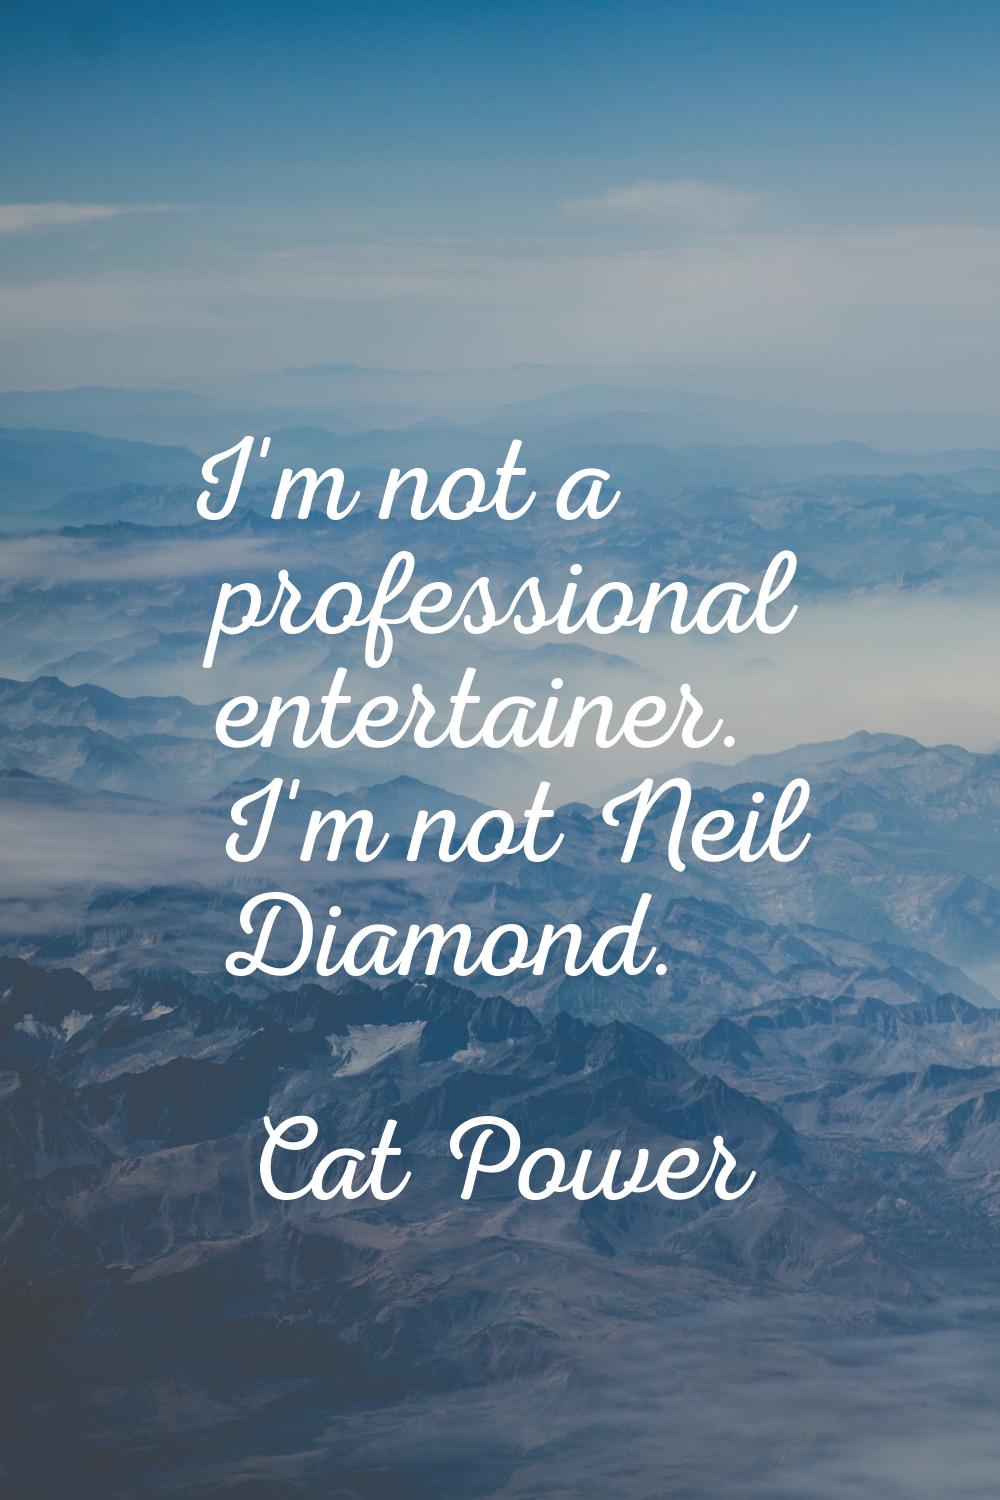 I'm not a professional entertainer. I'm not Neil Diamond.